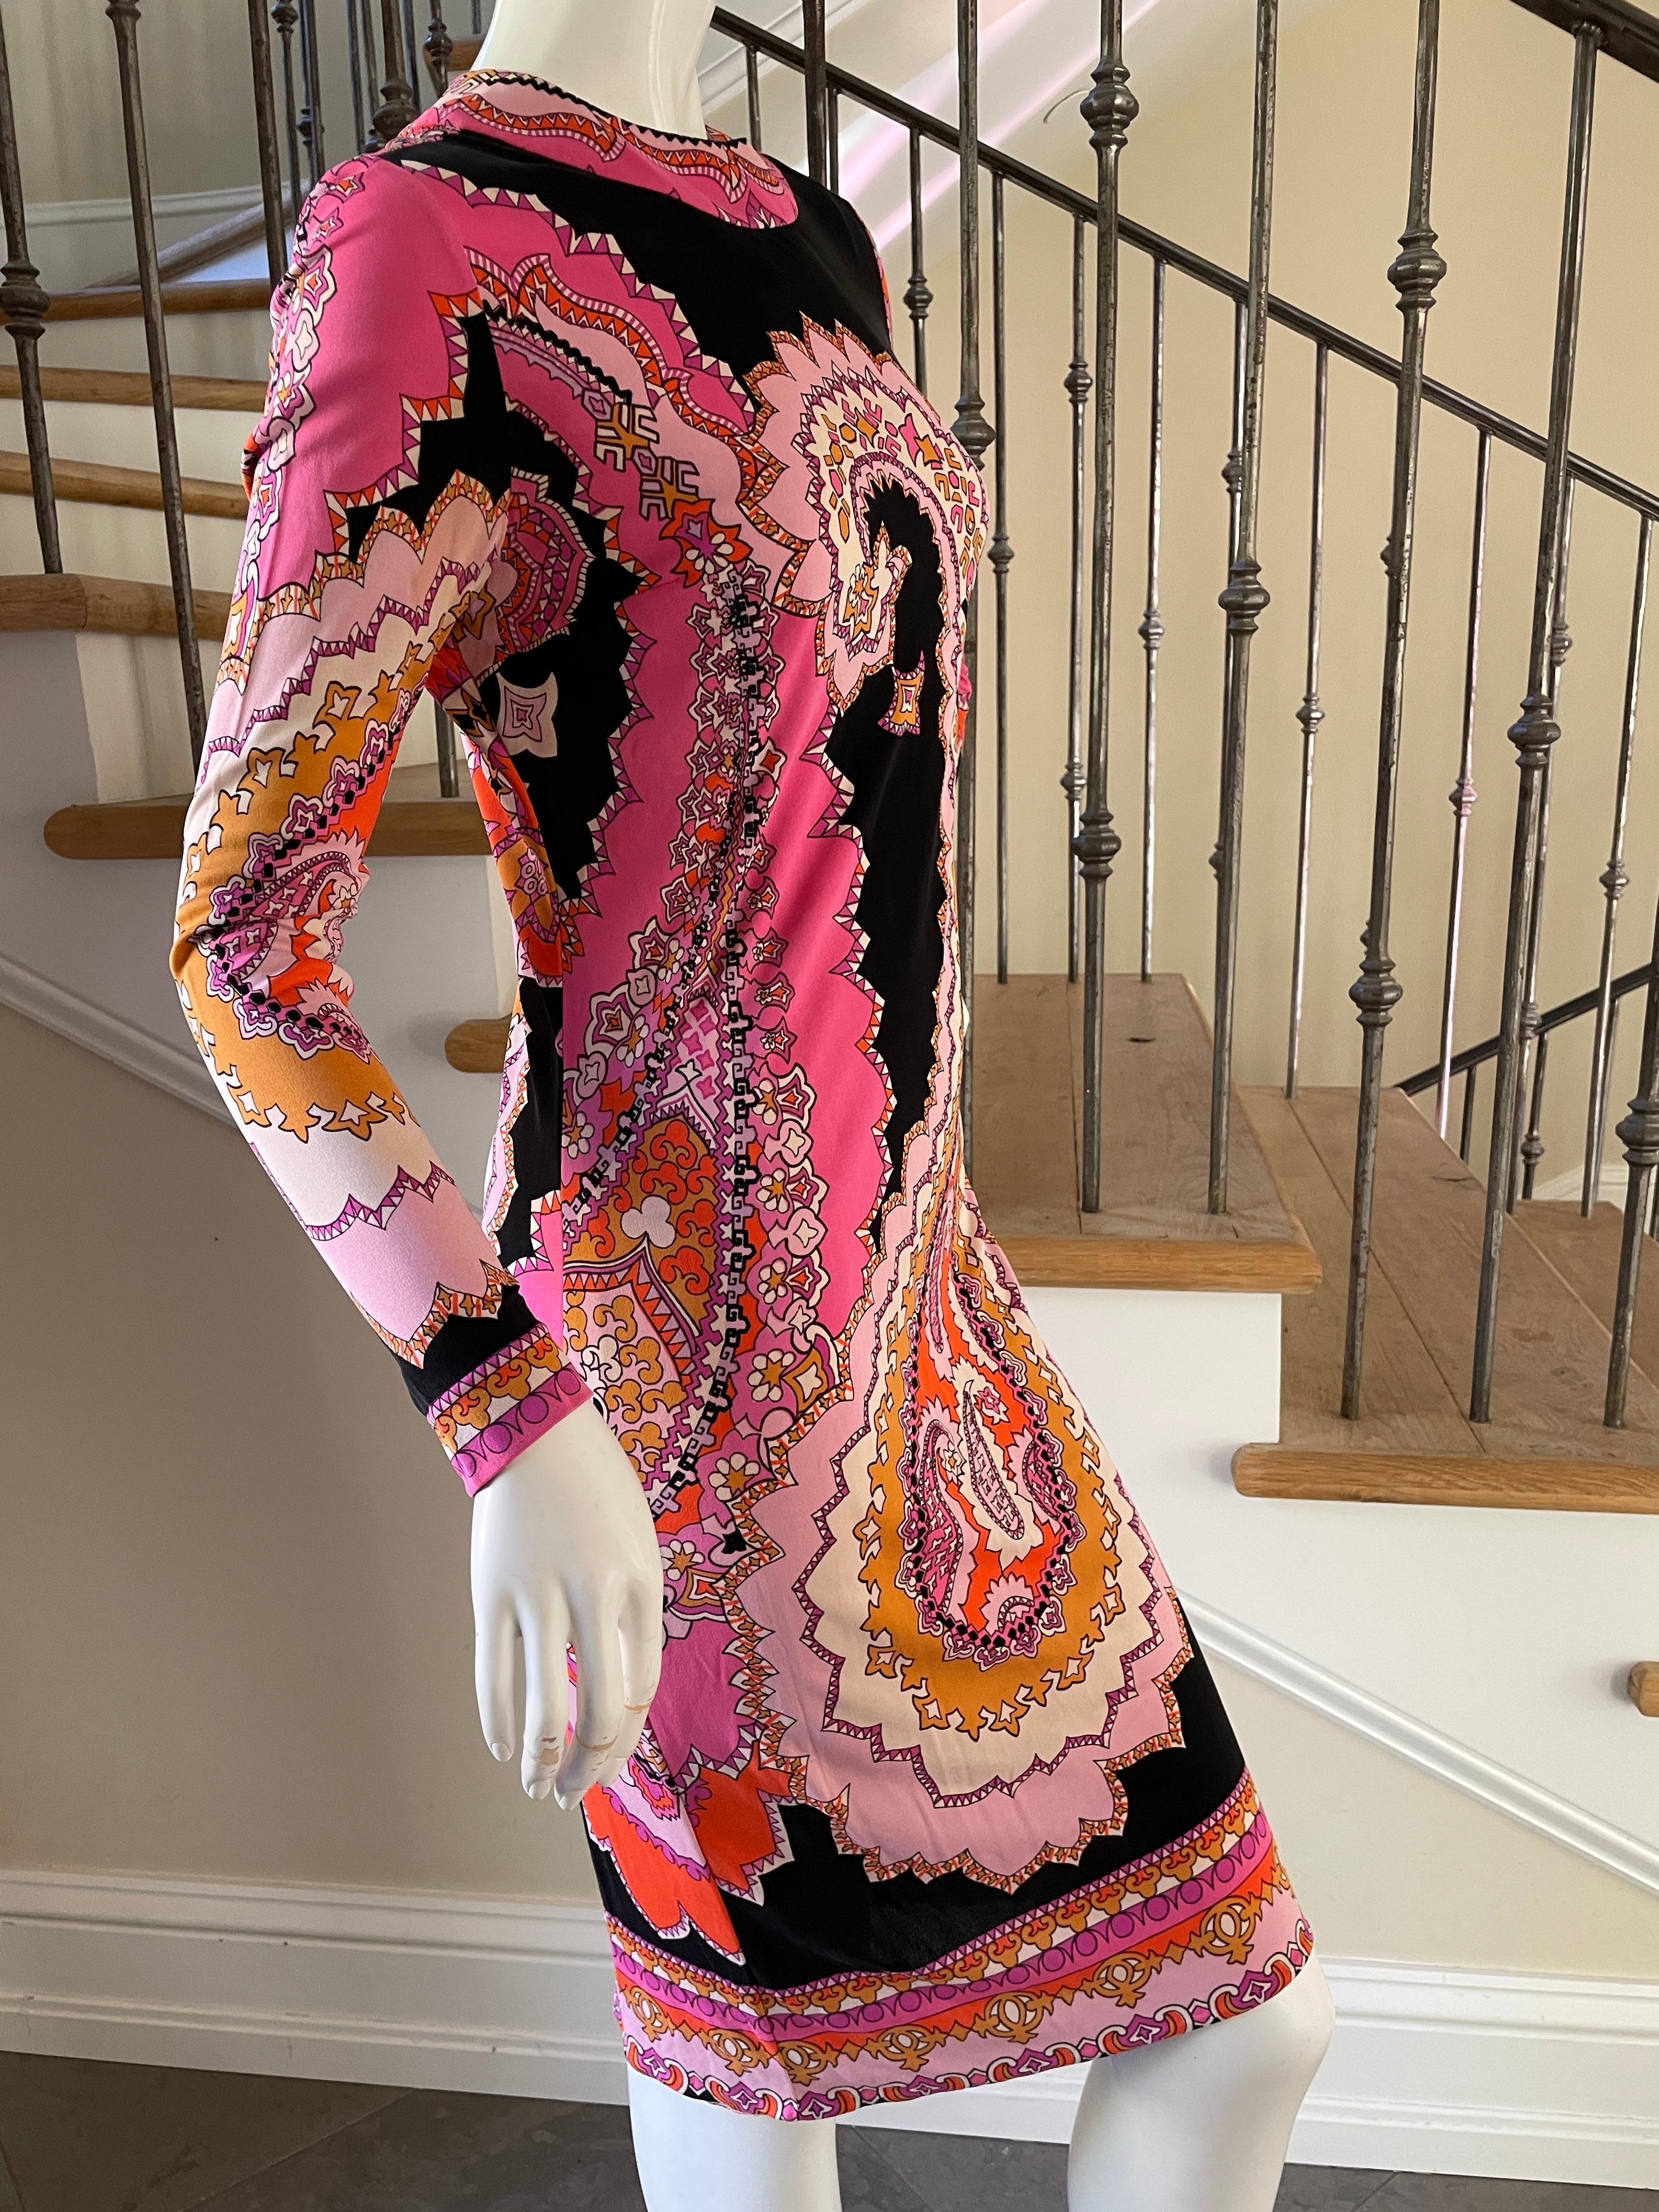  Leonard Paris Vintage 70's Pink Paisley Print Silk Jersey Dress For Sale 3